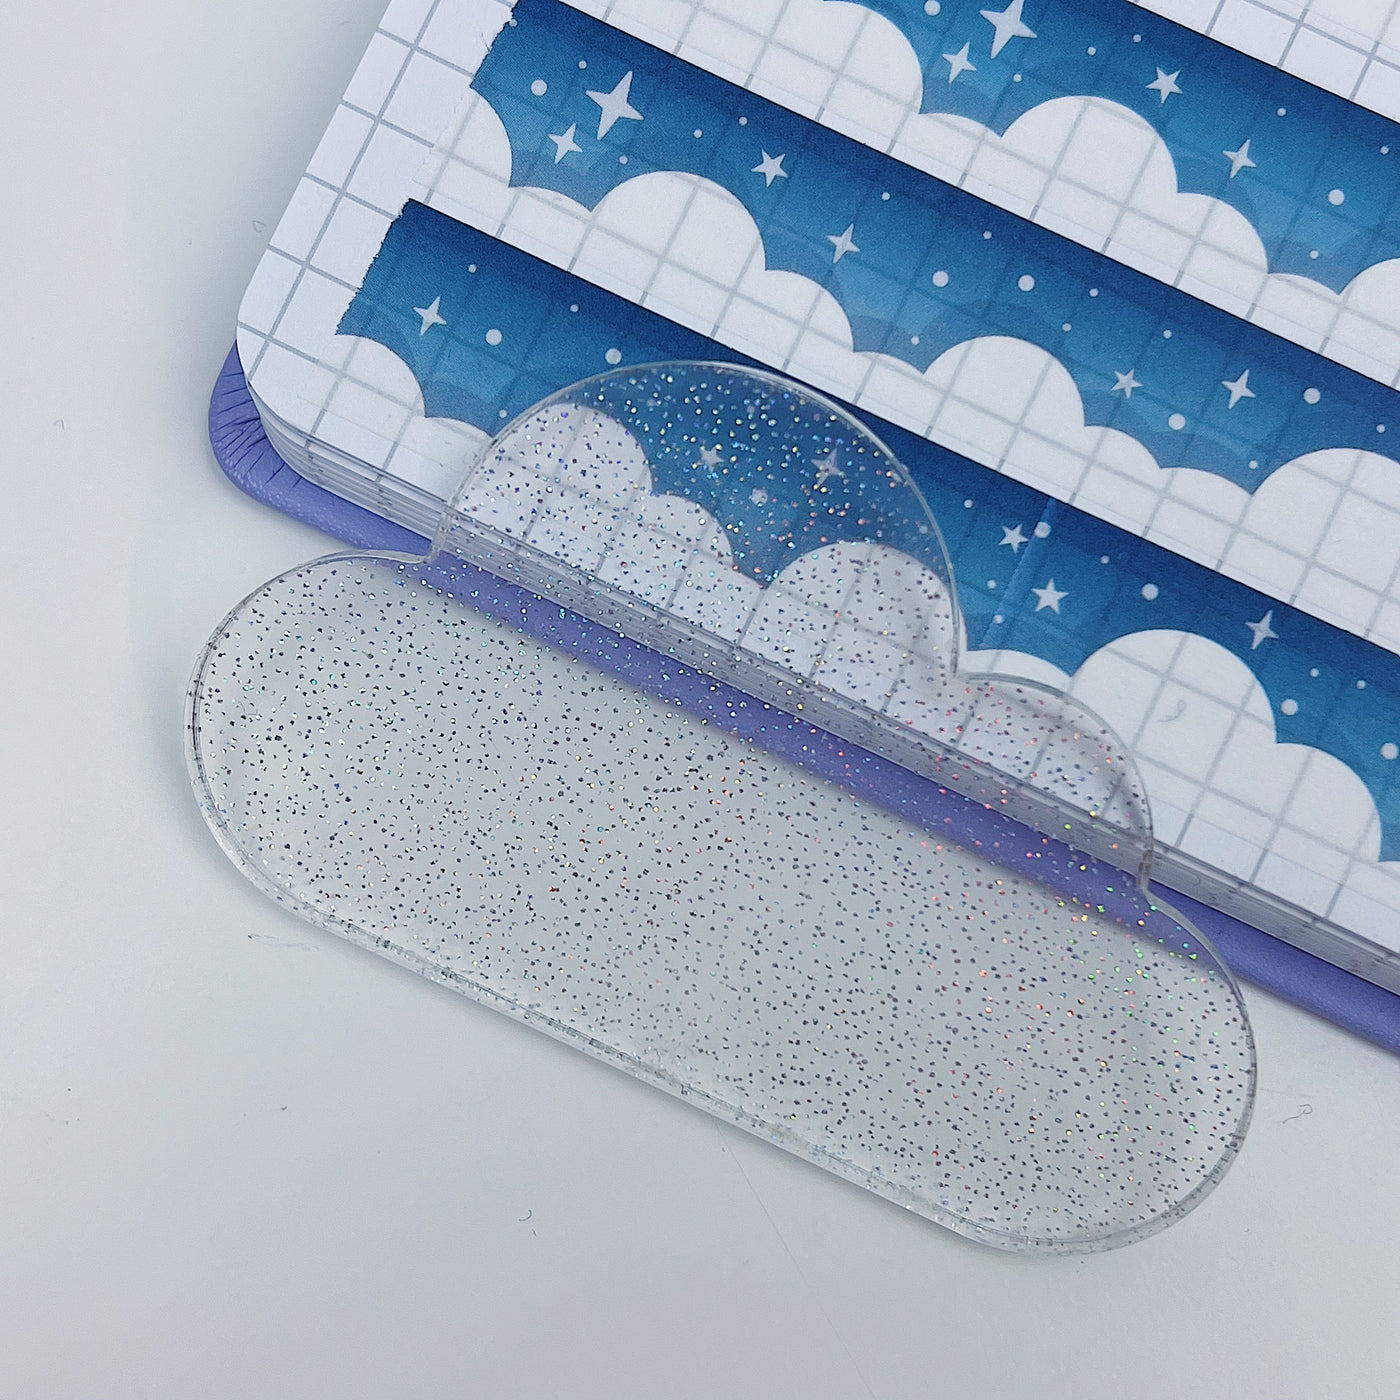 Iridescent Cloud Washi Buddy | Cut Washi On The Go!